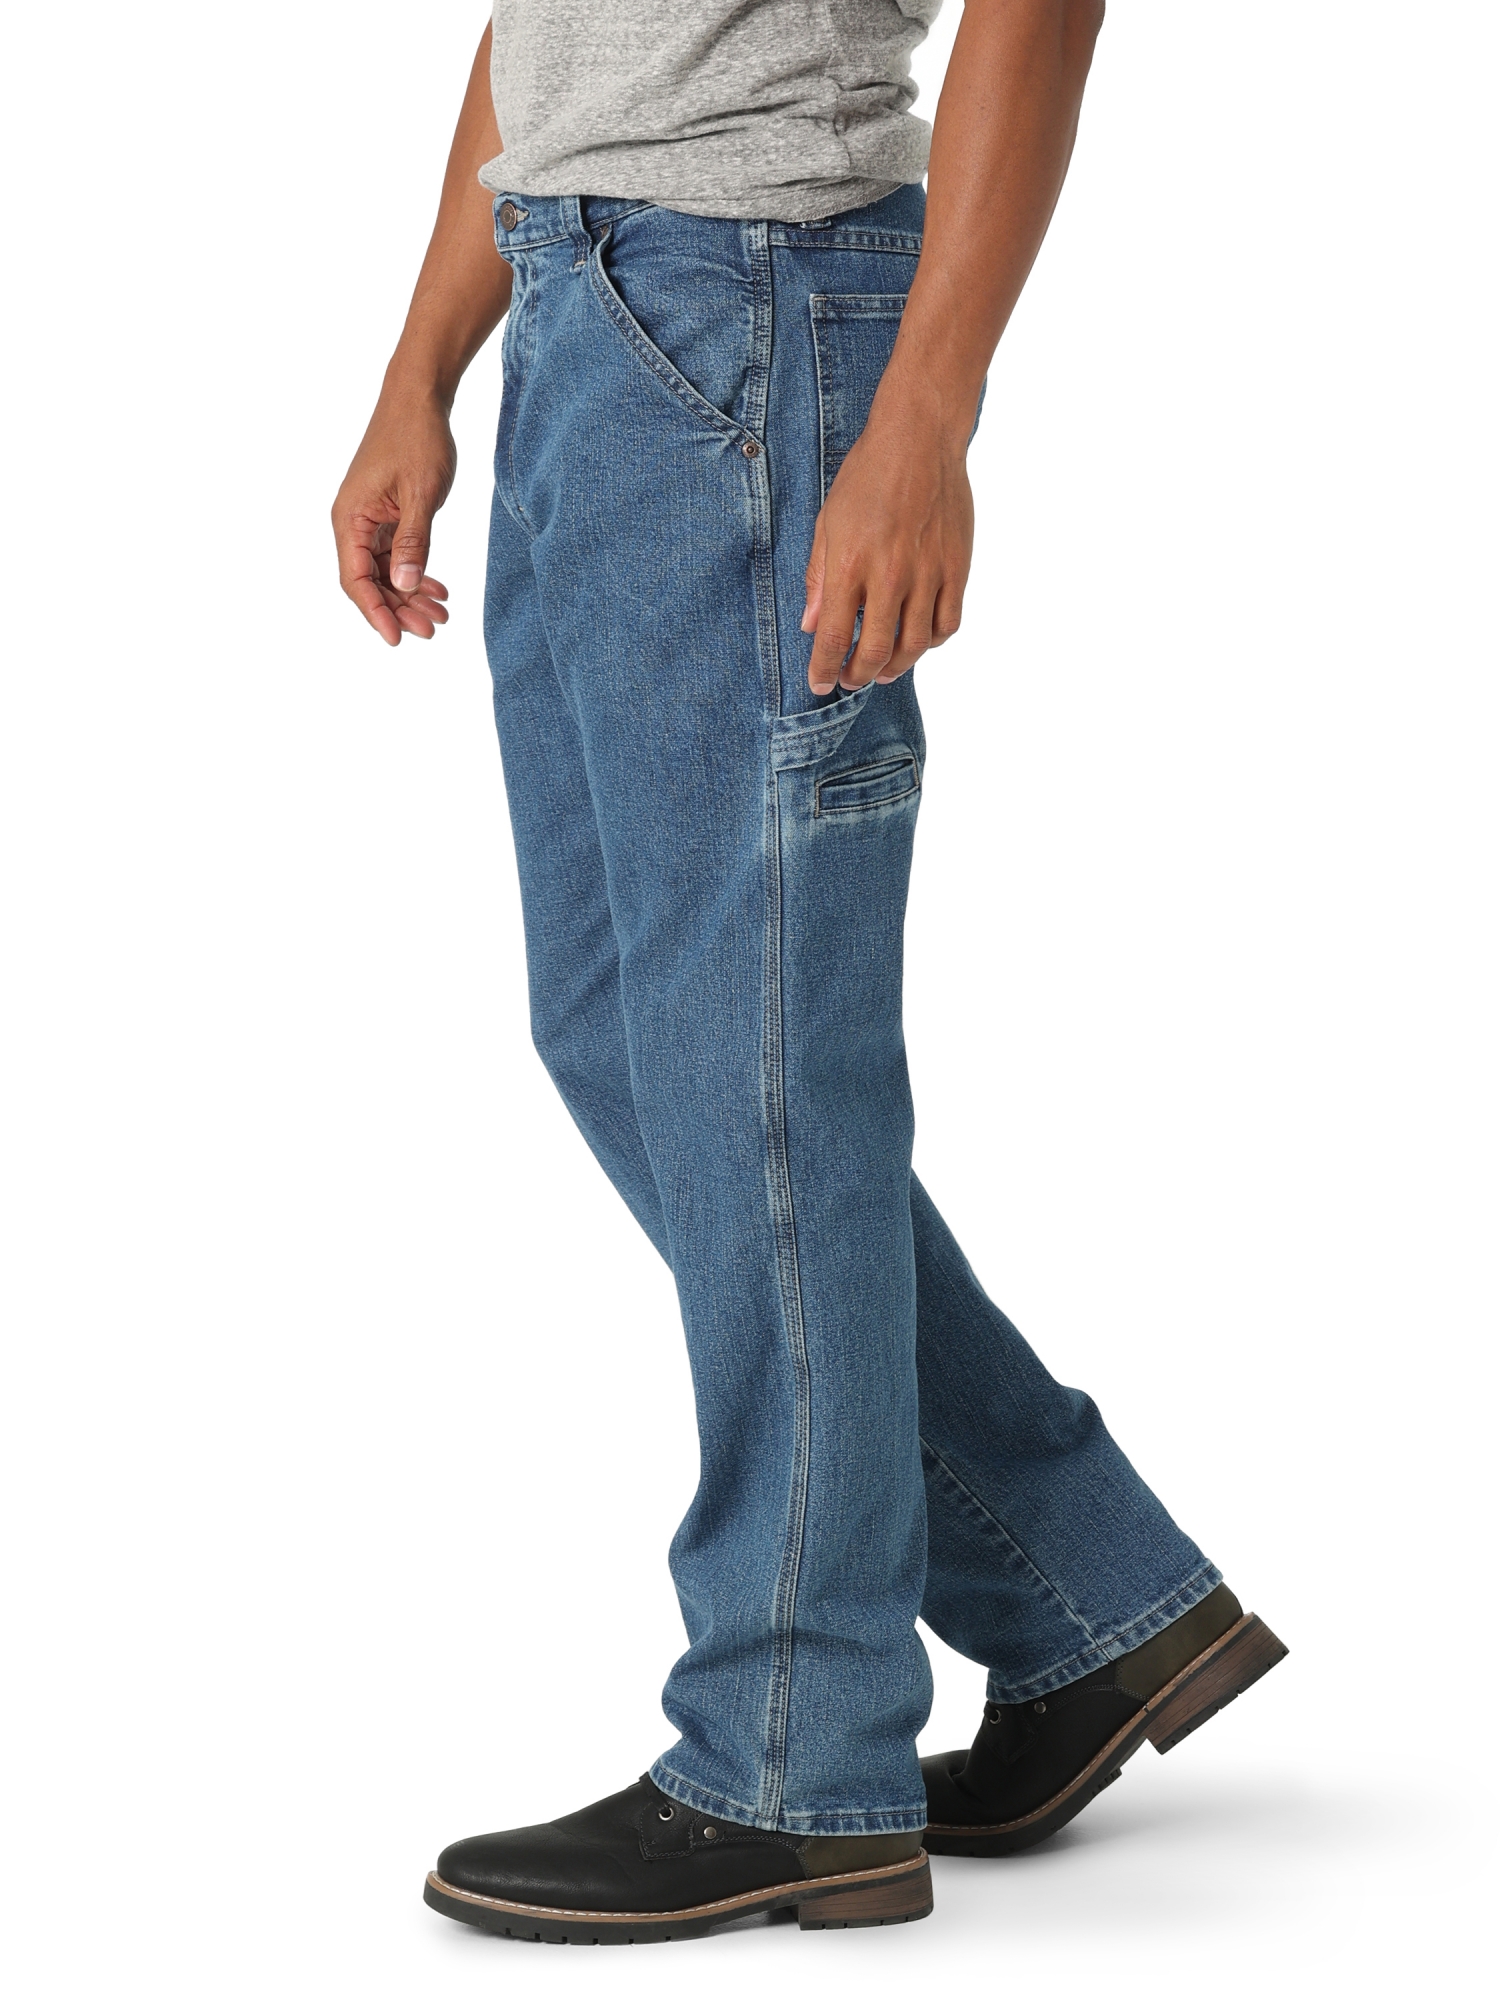 Wrangler Men's Carpenter Jean with Flex - image 3 of 8